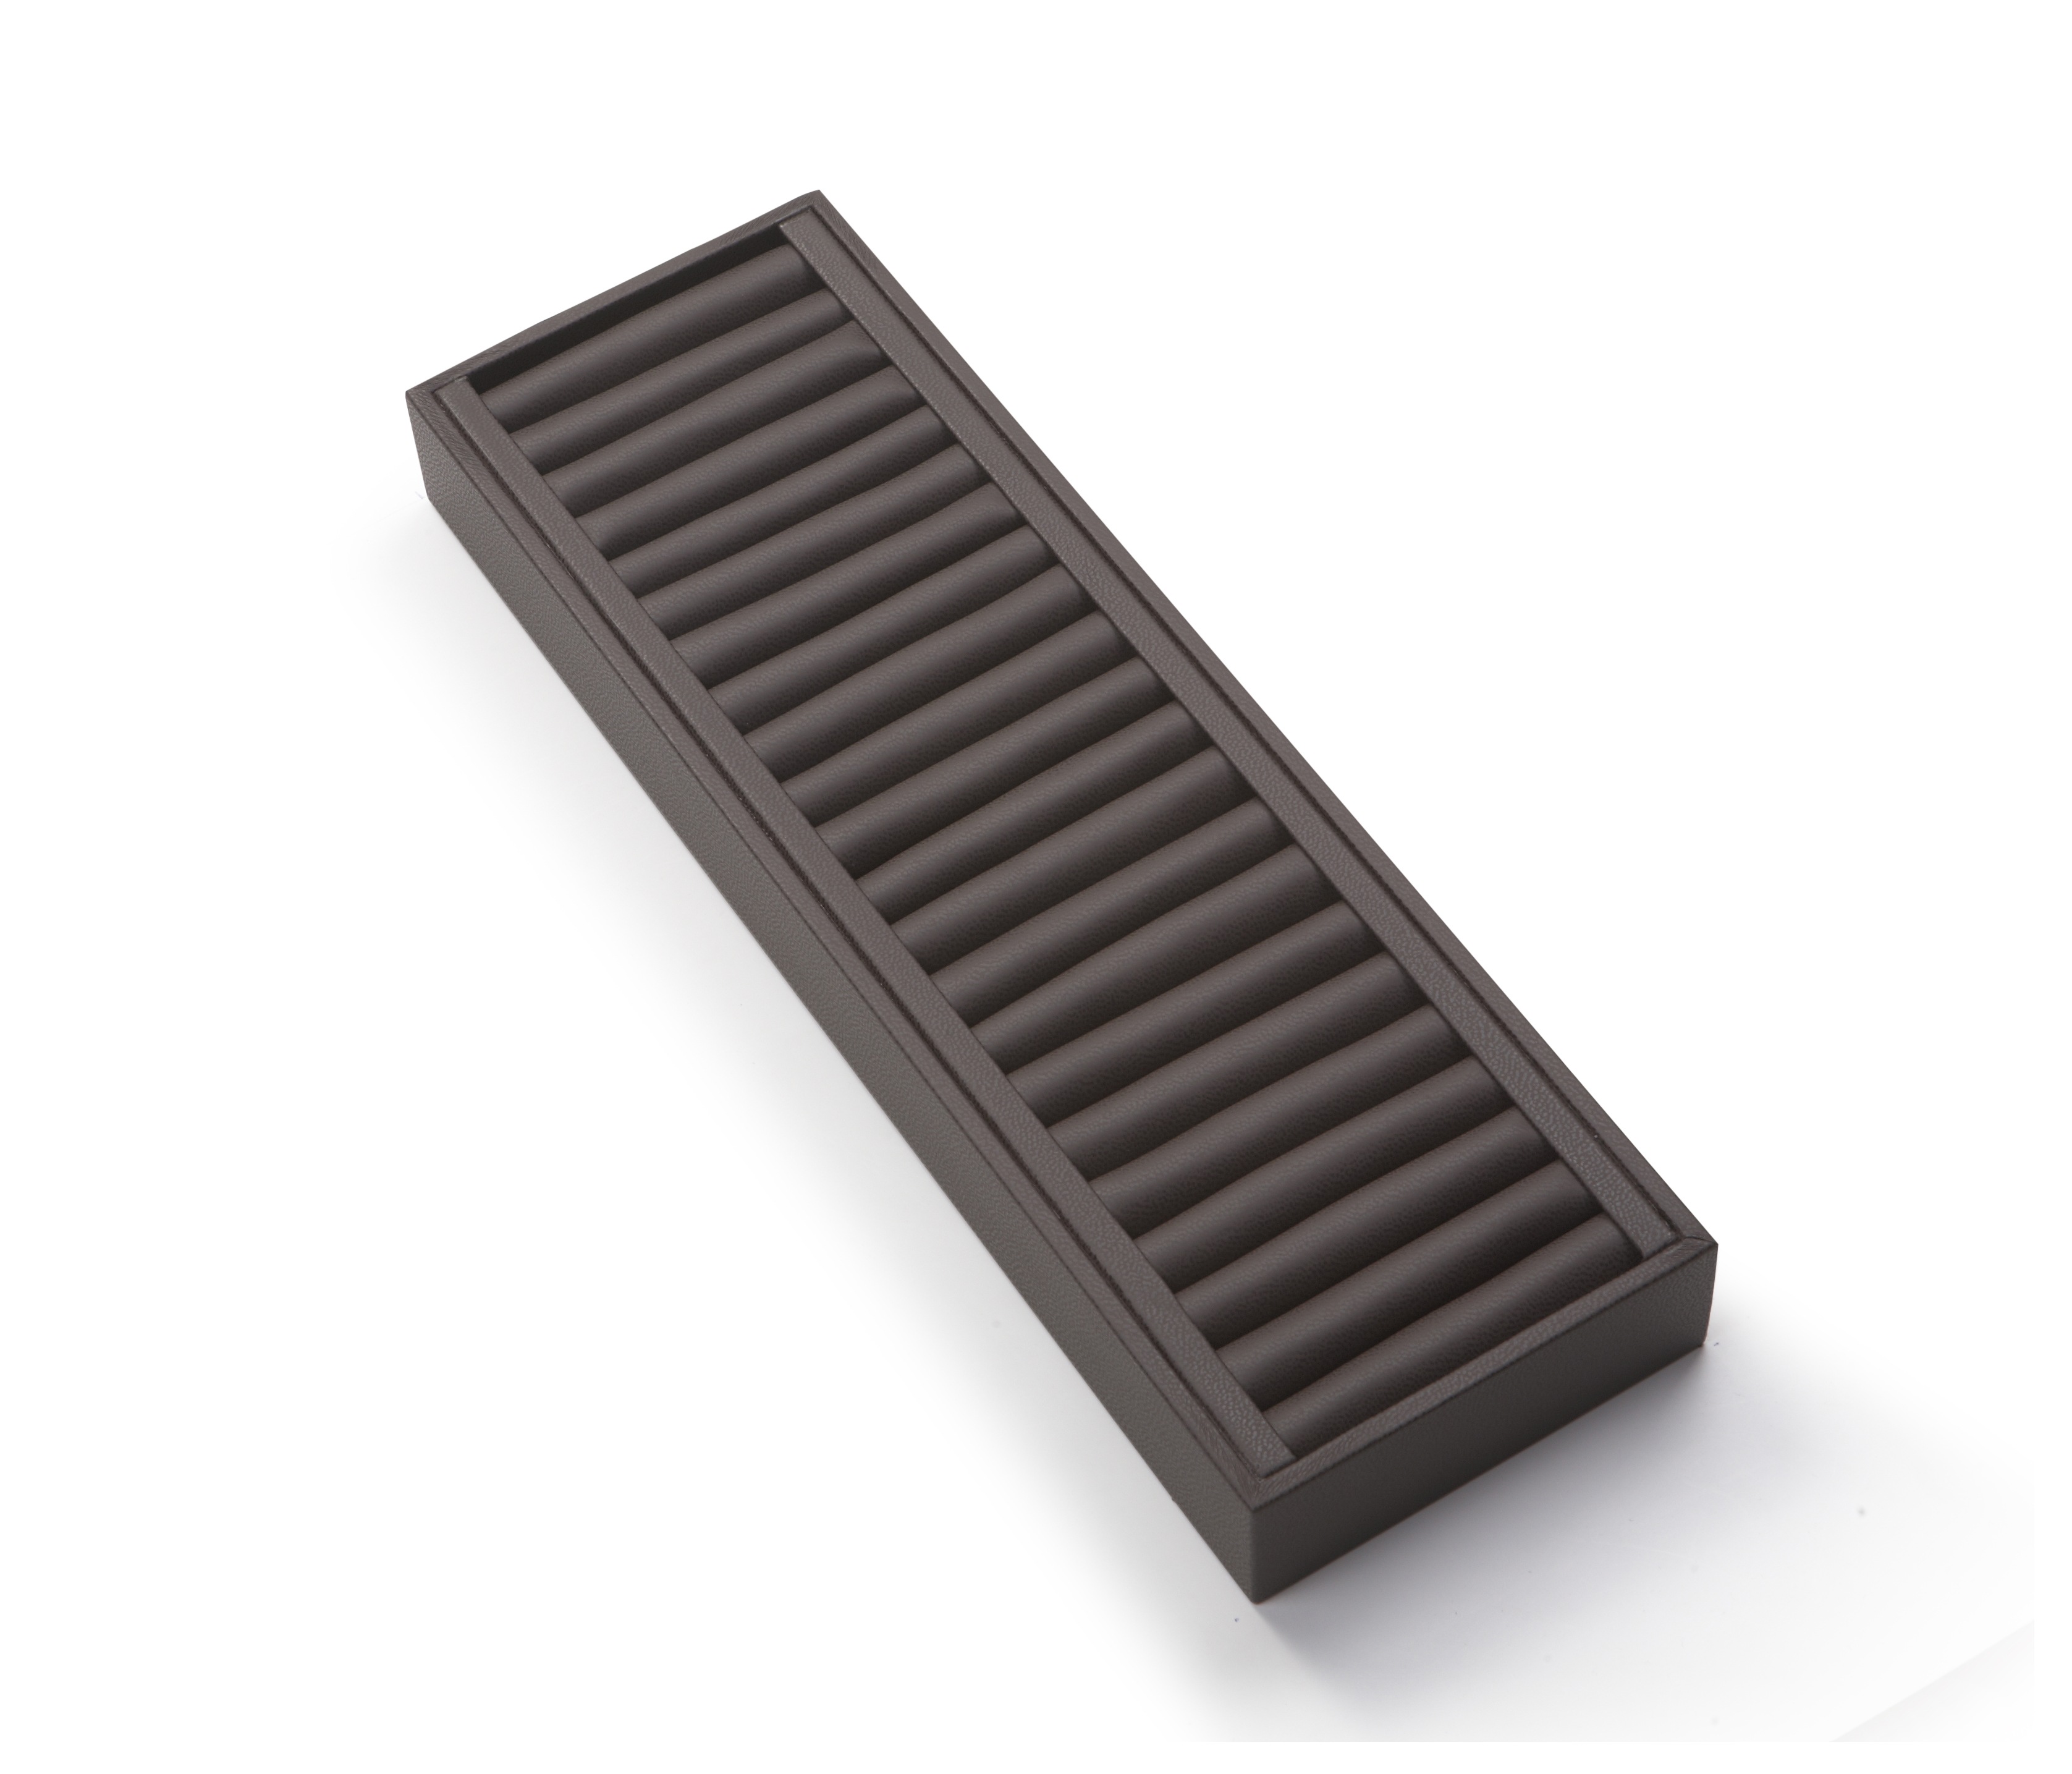 Chocolate Leatherette Long Bangle Holder